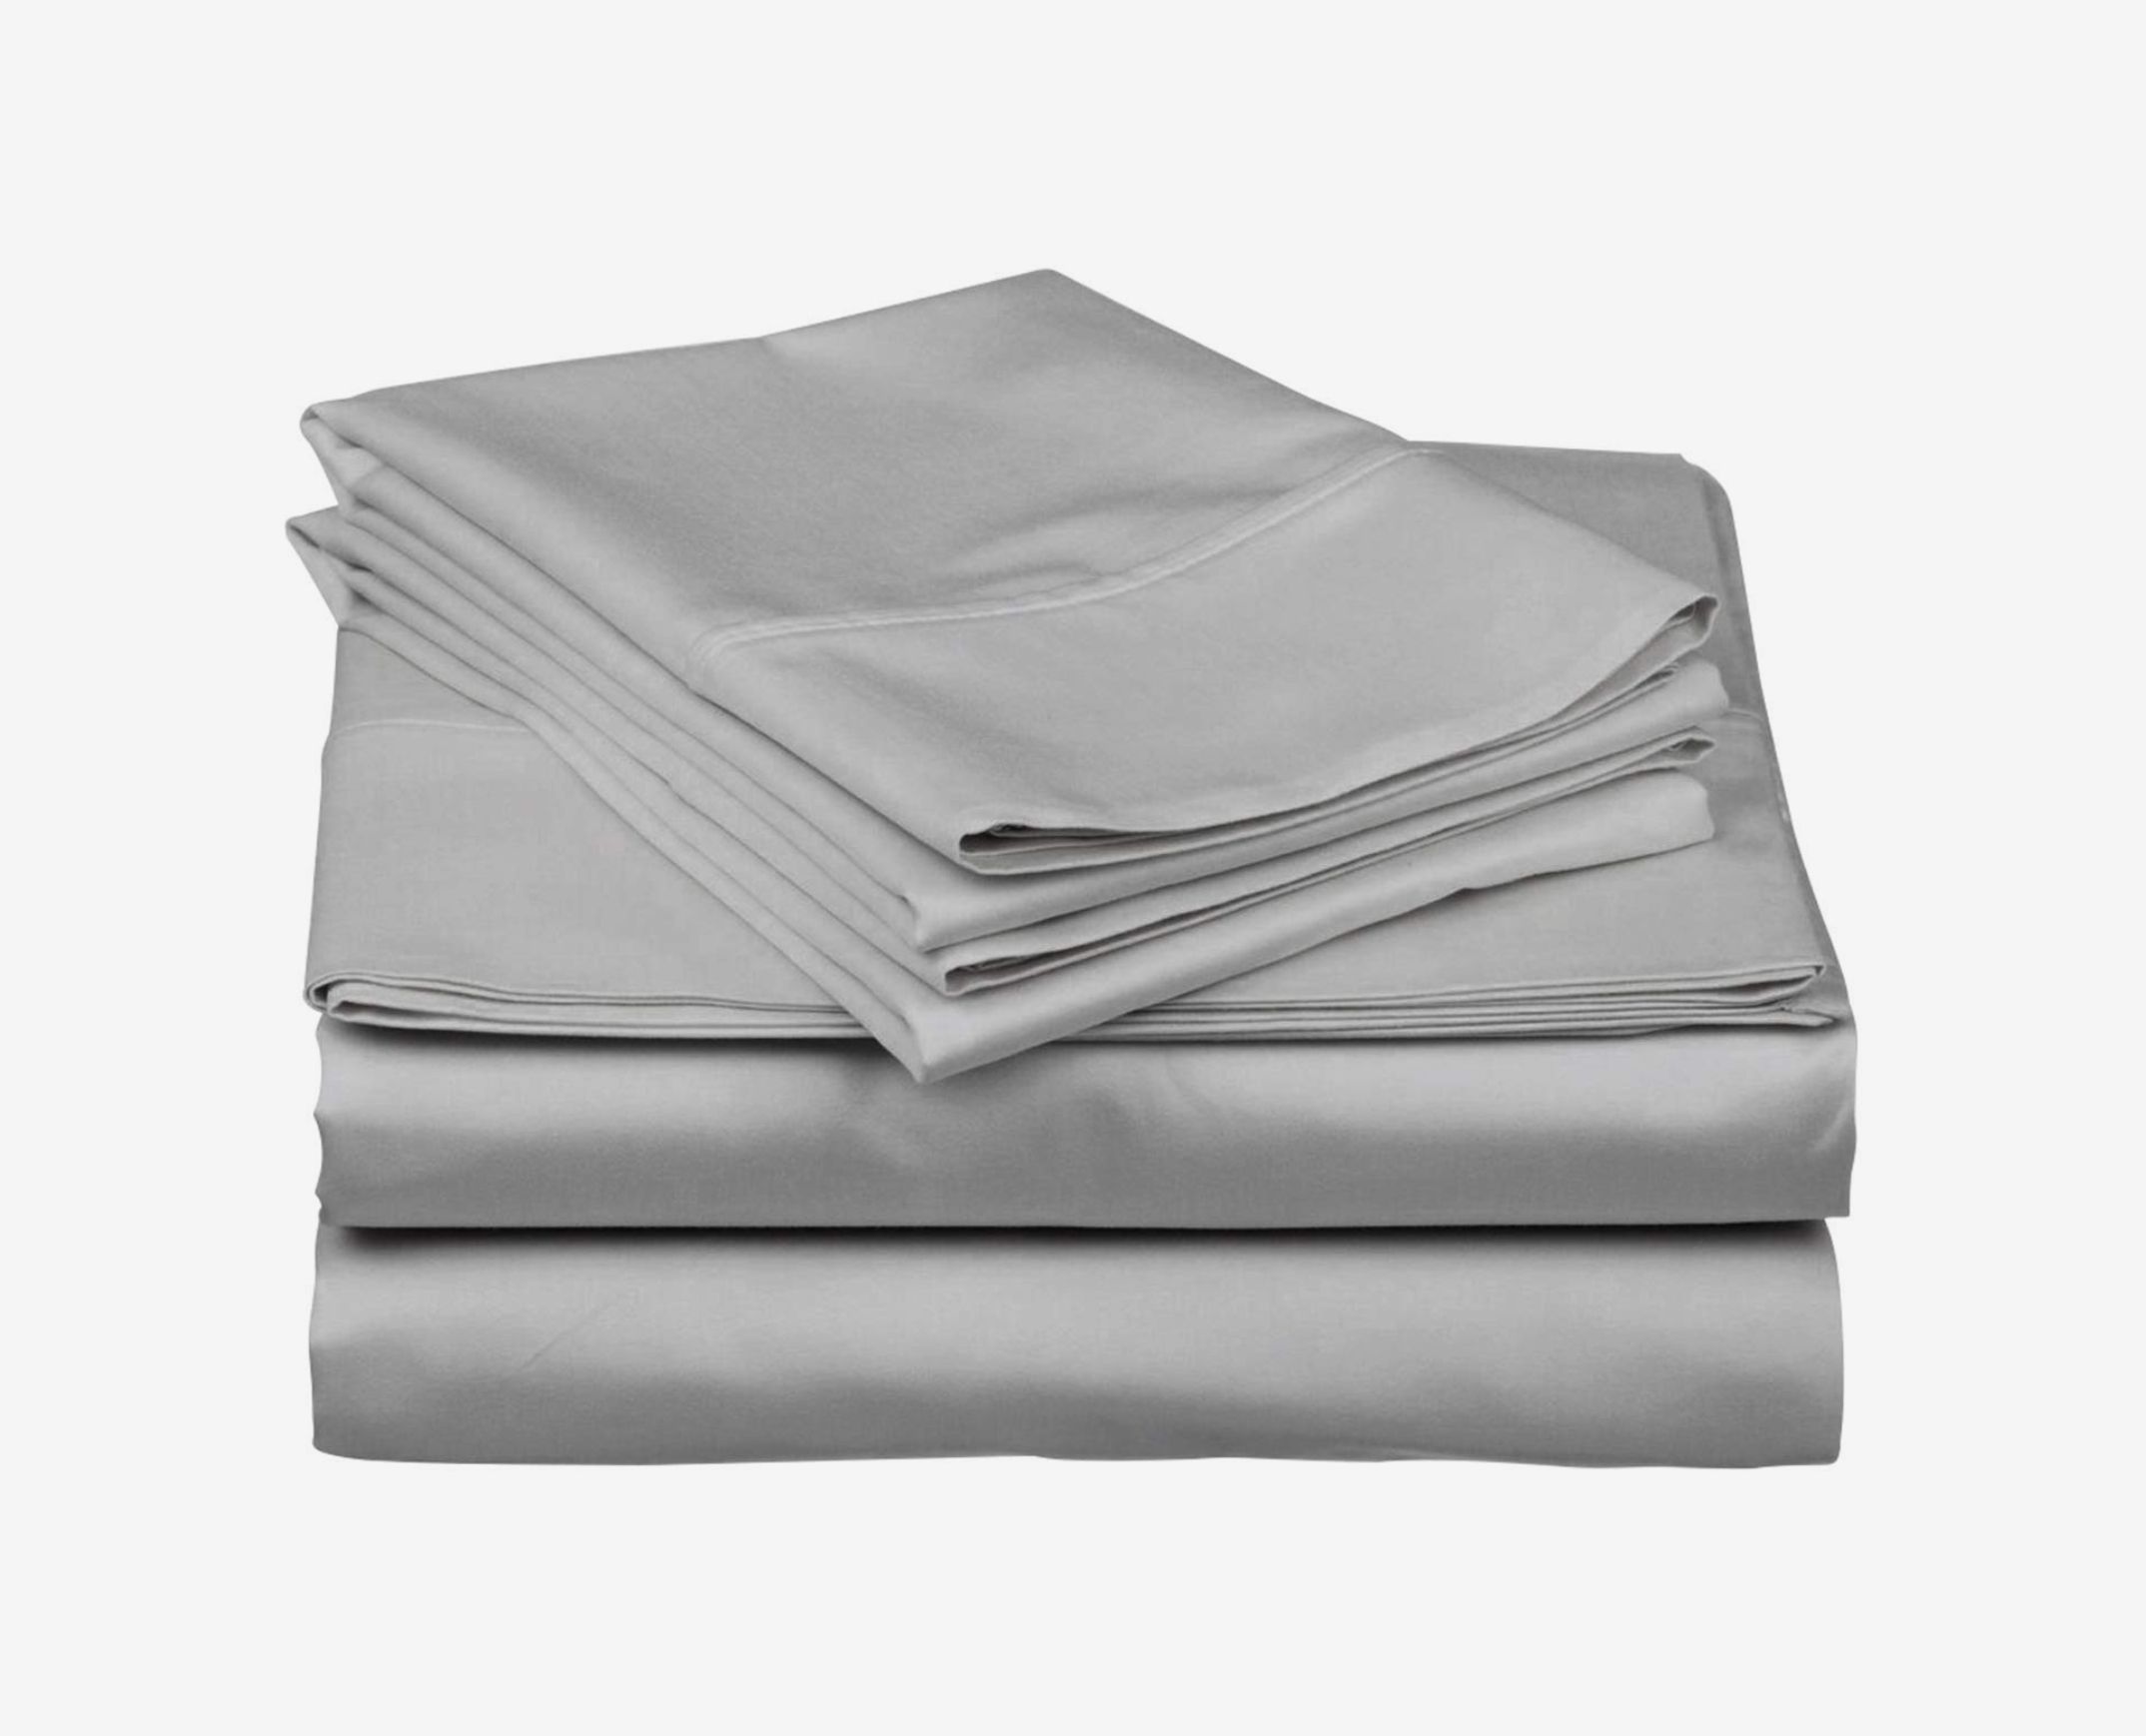 NIYS Luxury Bedding 100/% Egyptian Cotton Flat Bedsheets Percale Quality Beige, Double